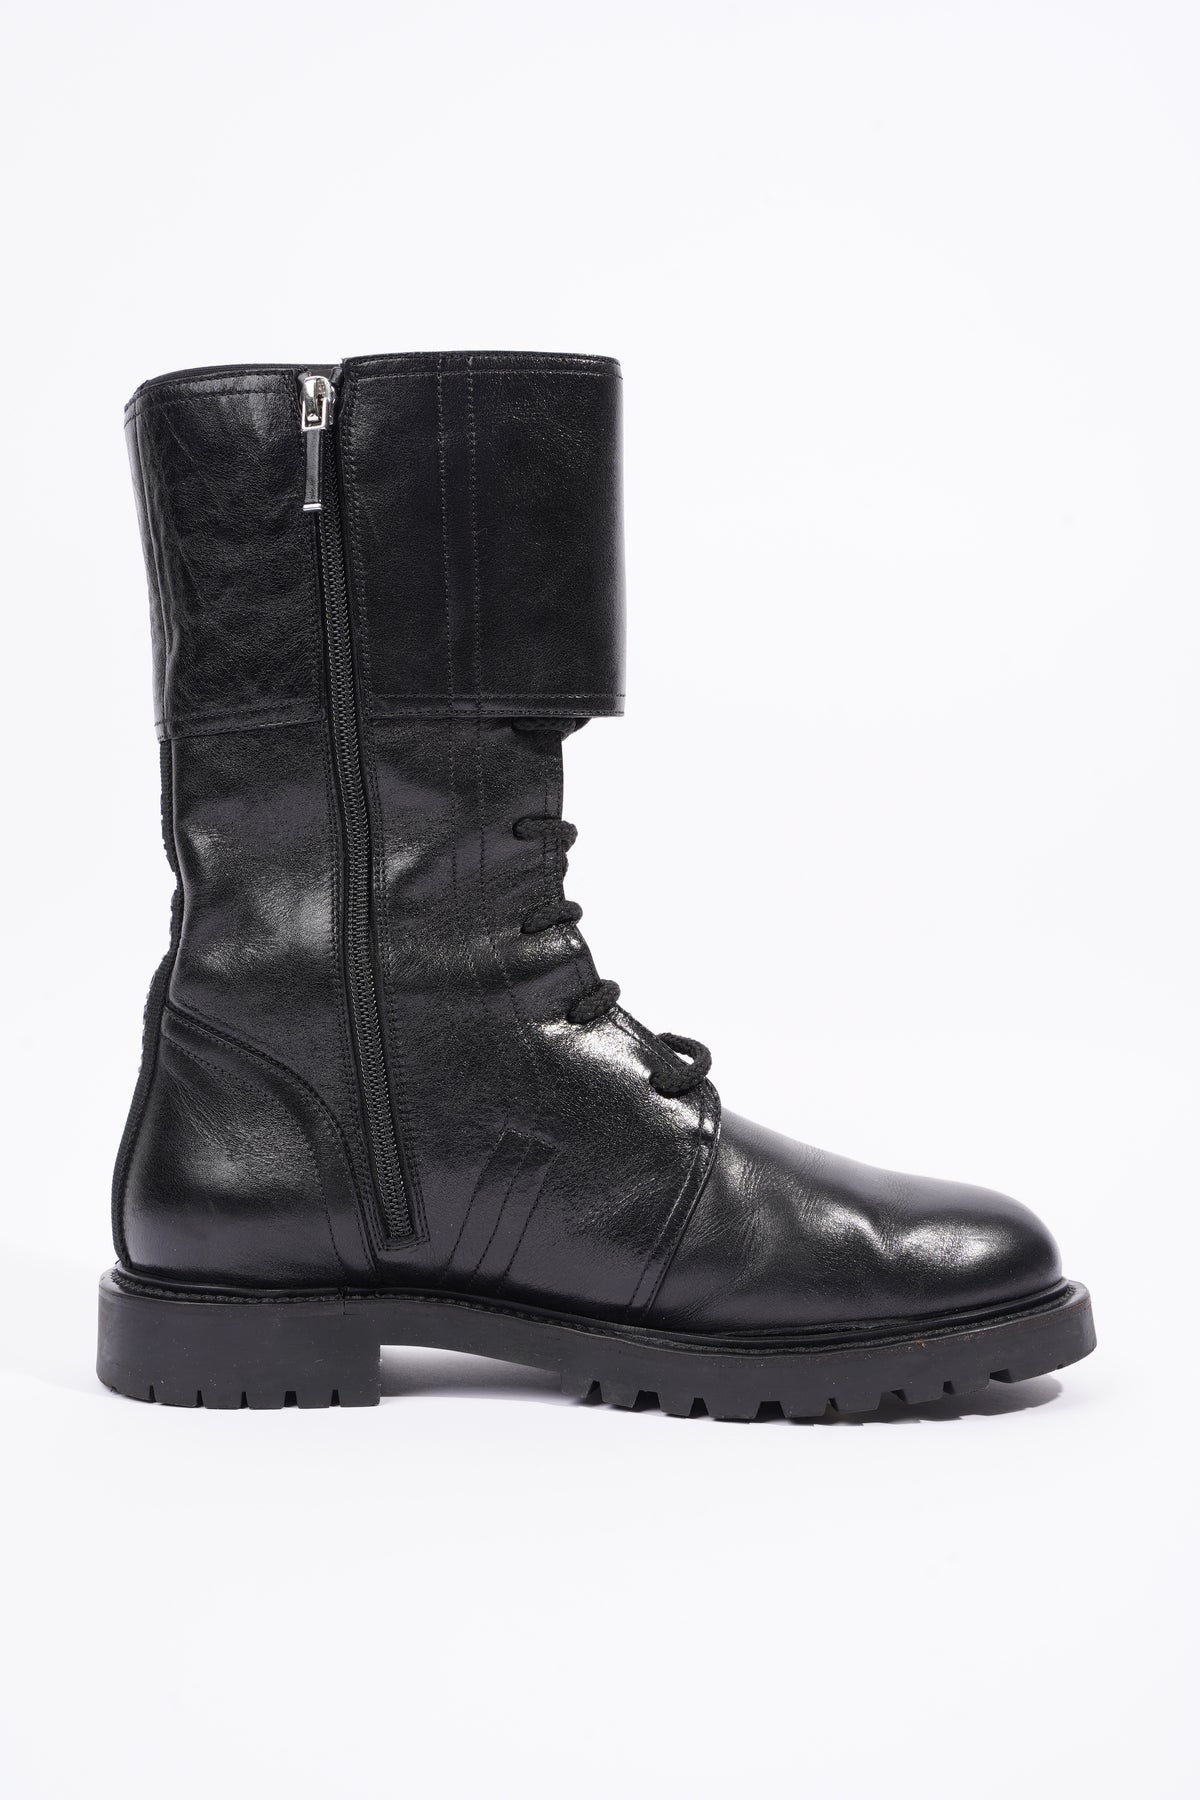 Leather biker boots Louis Vuitton Black size 38.5 EU in Leather